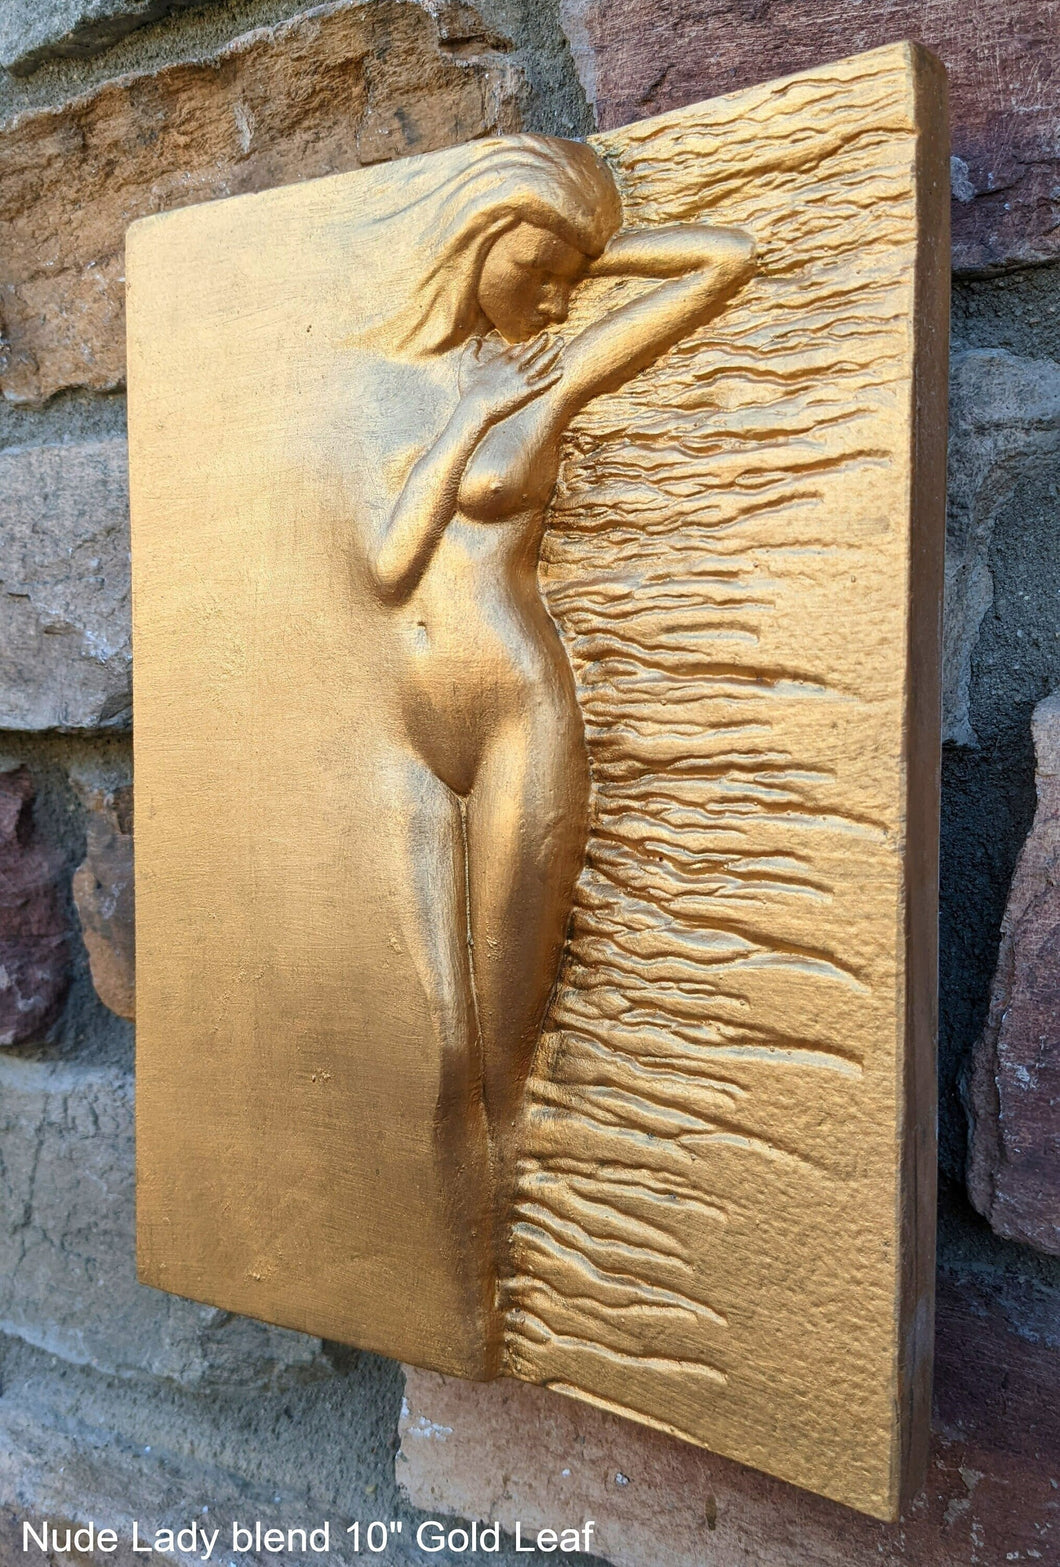 Nude lady blend sculpture wall plaque decor 10